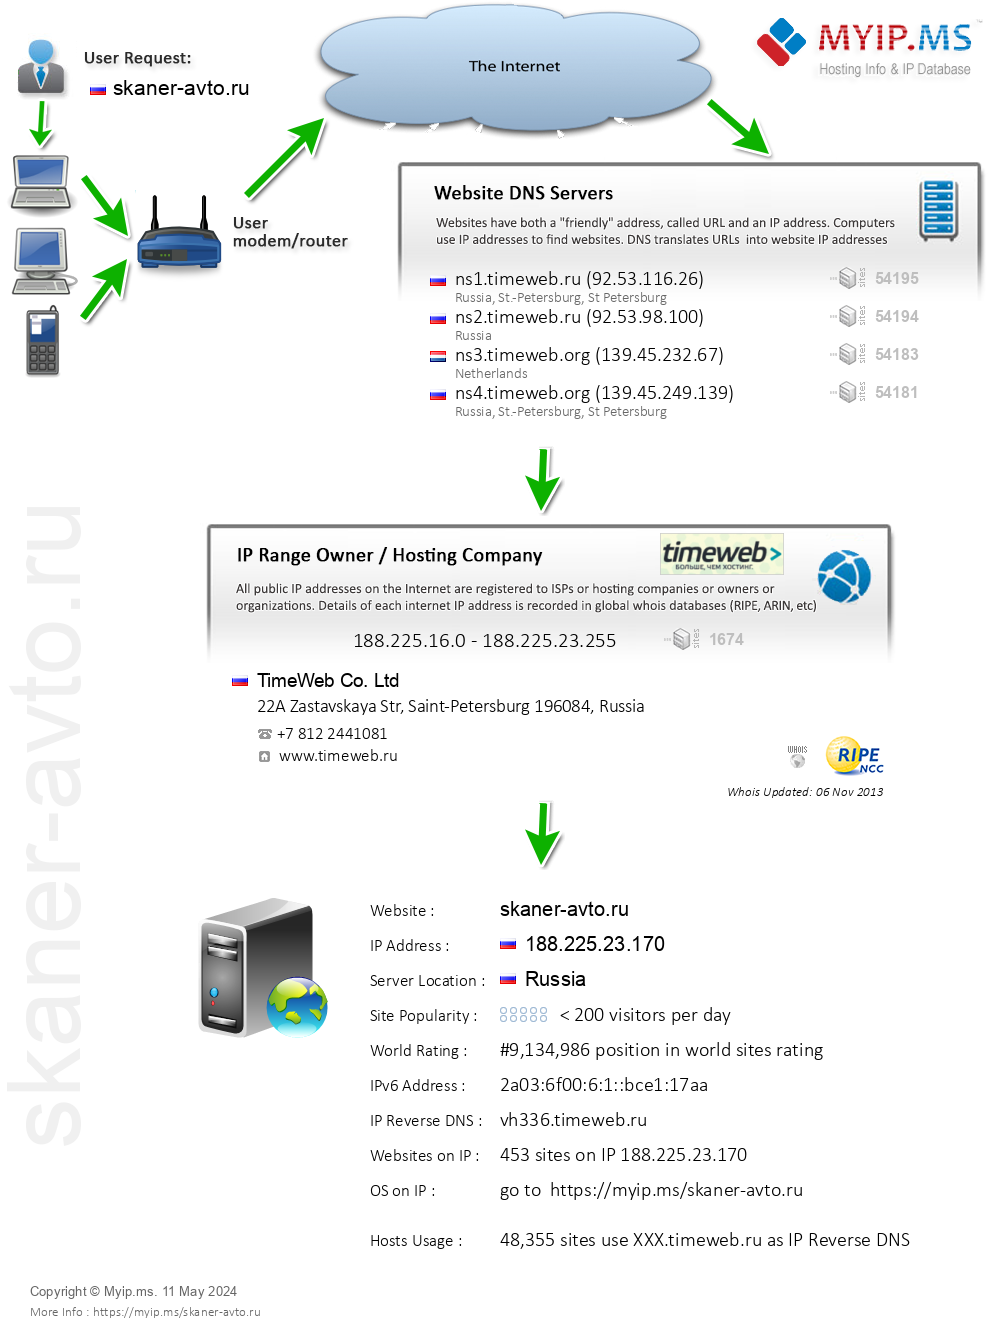 Skaner-avto.ru - Website Hosting Visual IP Diagram